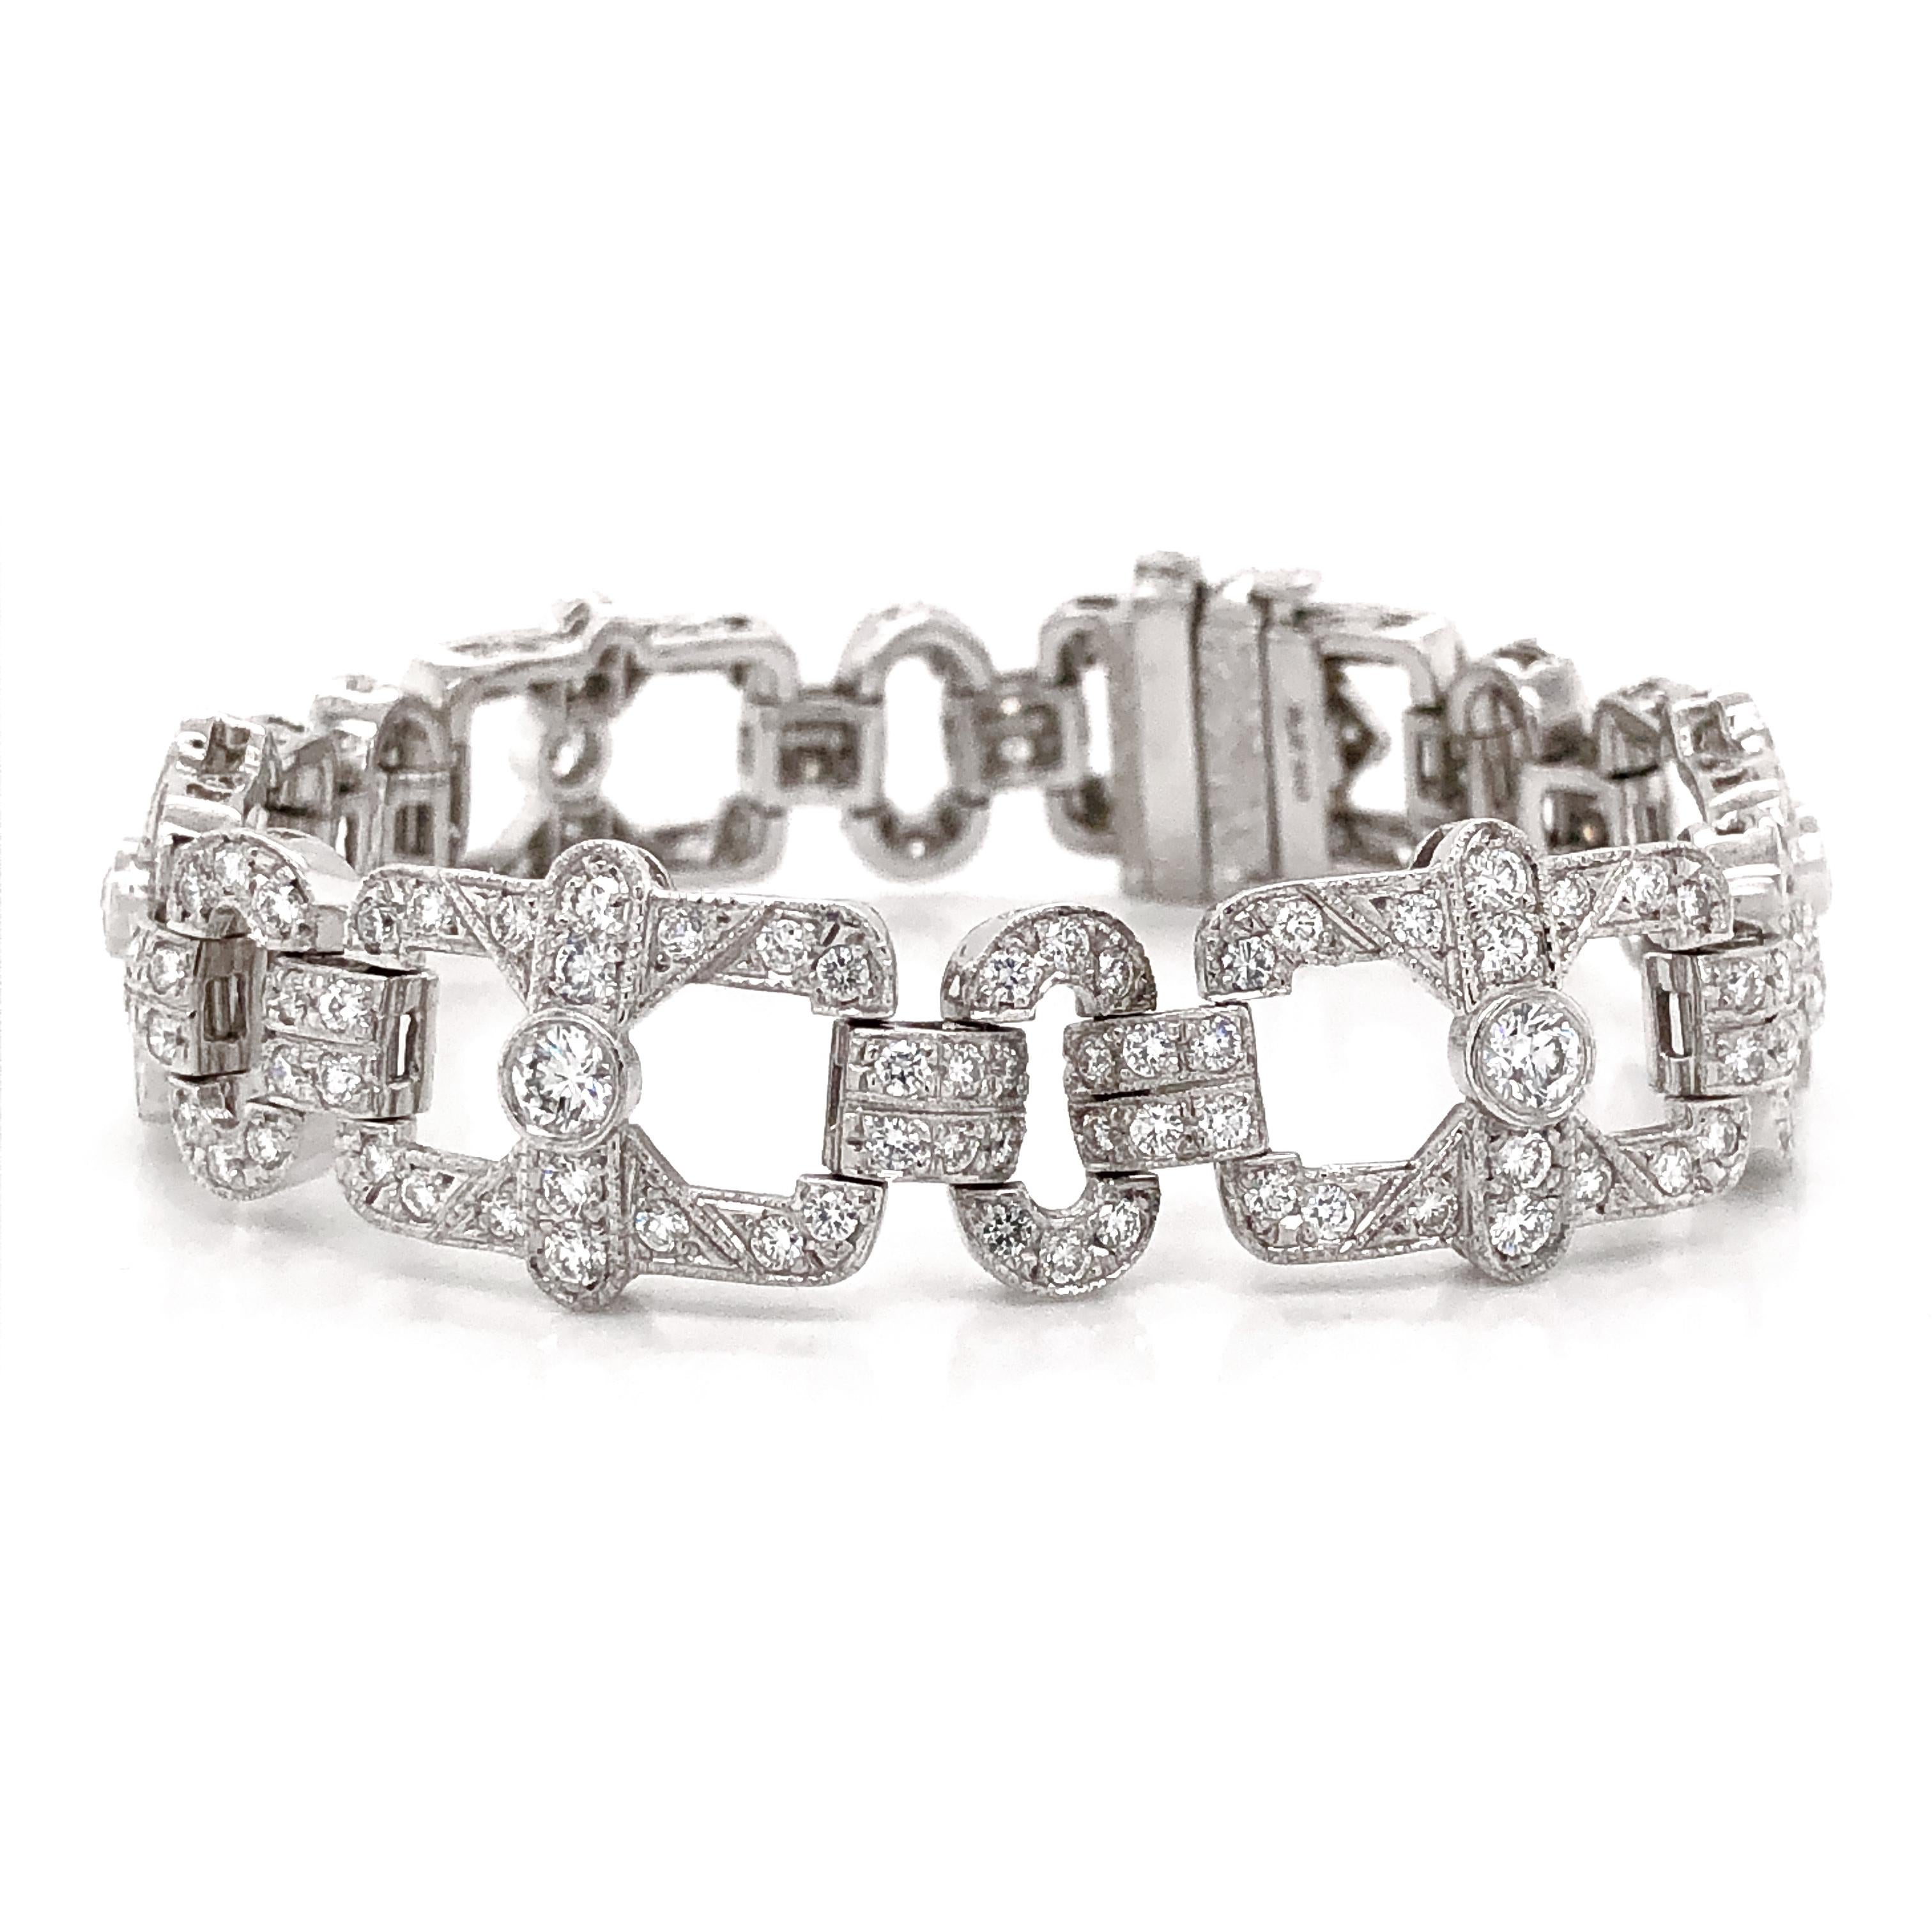 Contemporary Art Deco Inspired Round Cut Diamonds 6.18 Carat Platinum Bracelet For Sale